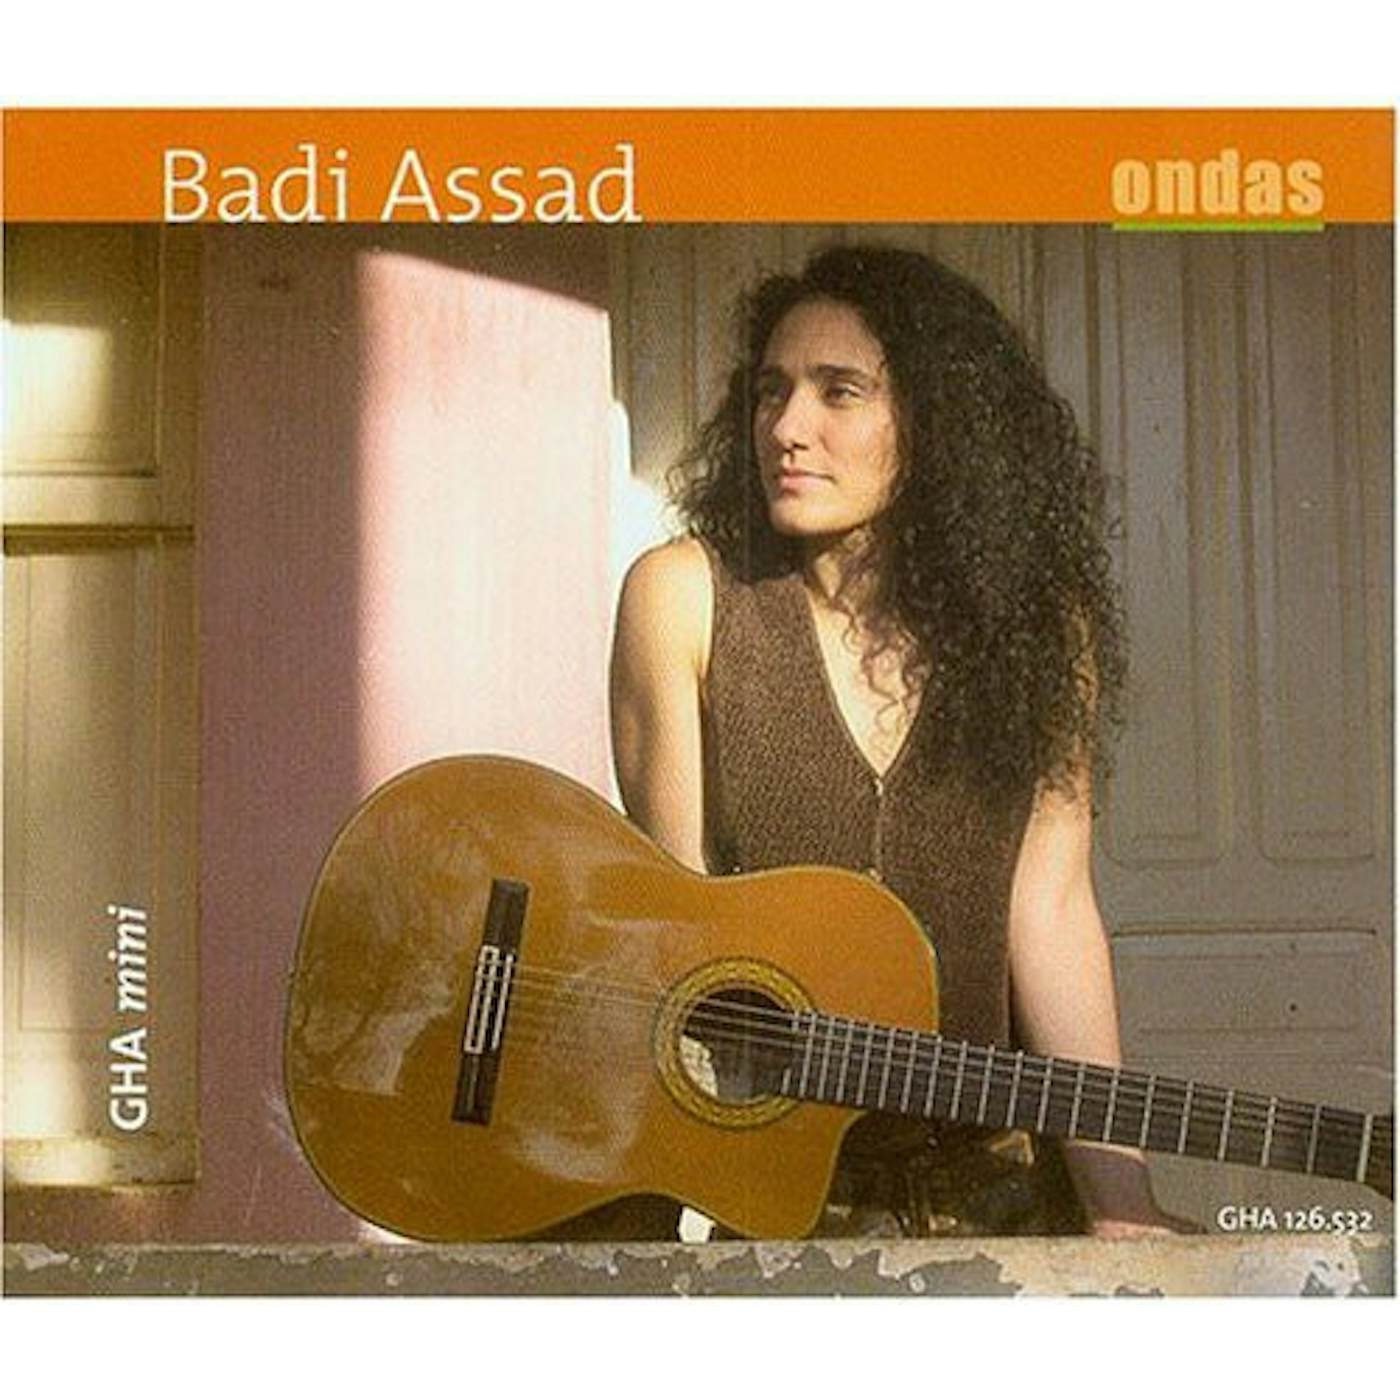 Badi Assad ONDAS CD